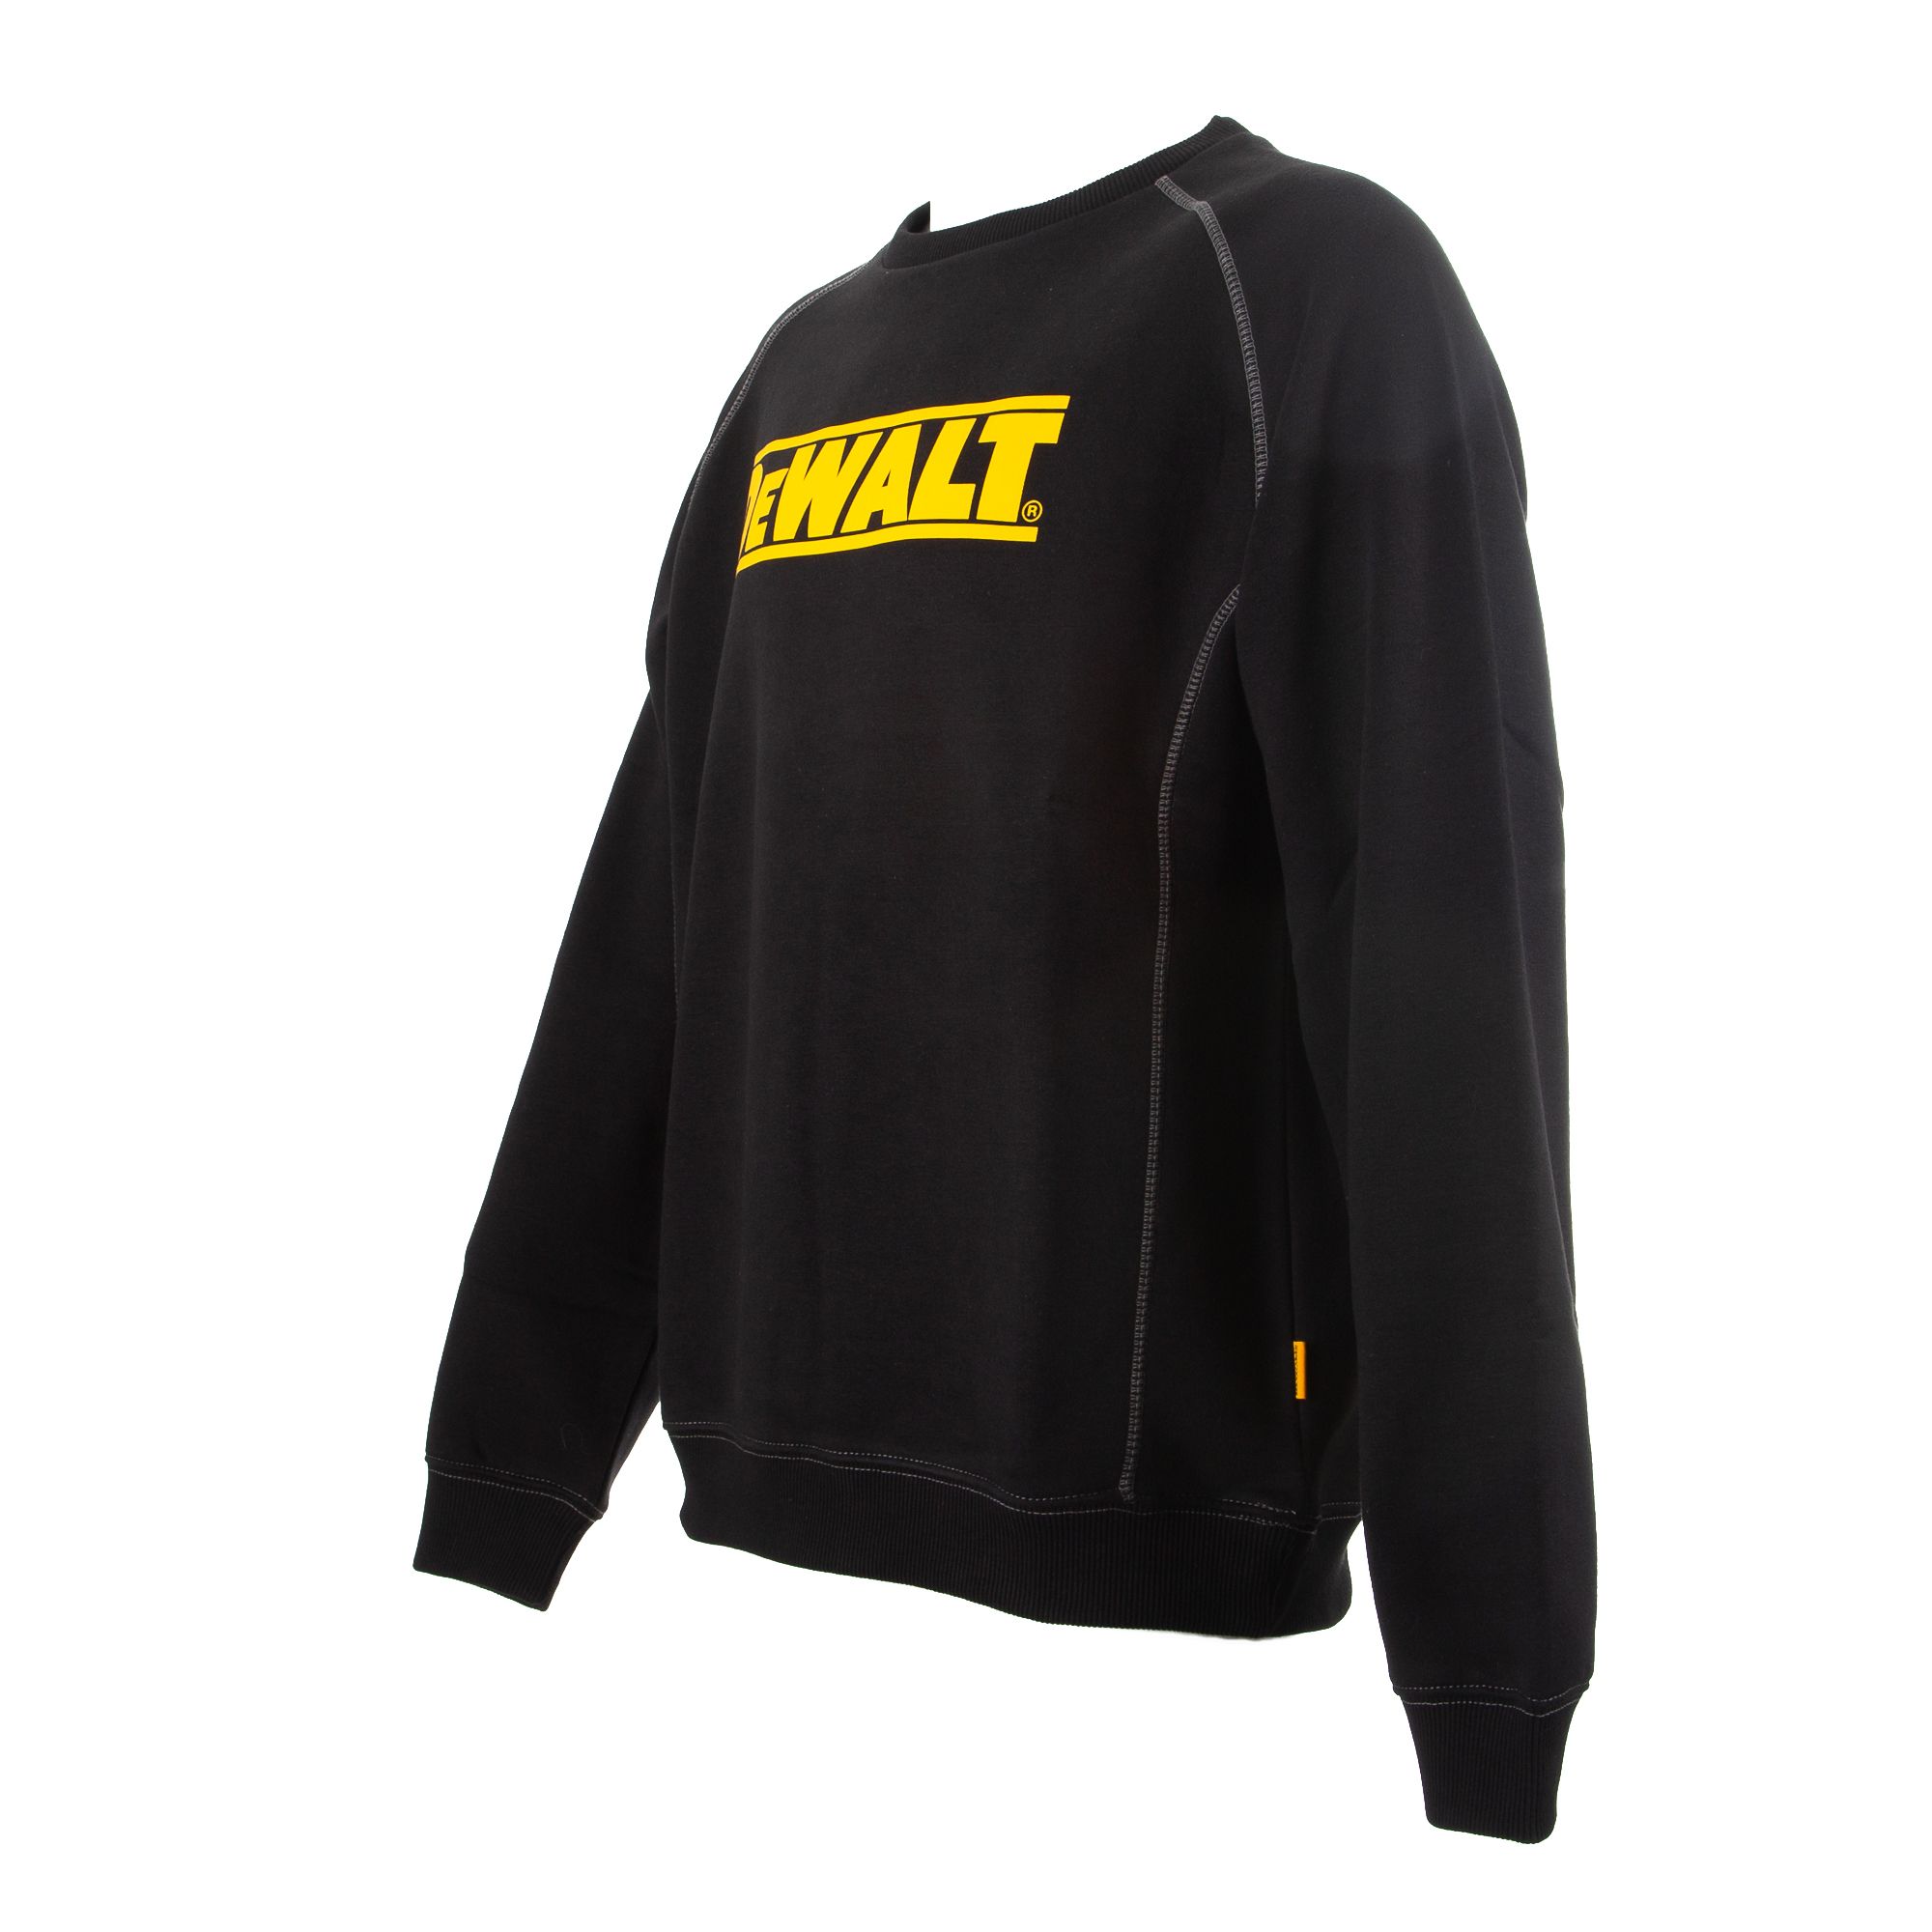 DeWalt Rosewell Black Sweatshirt Medium